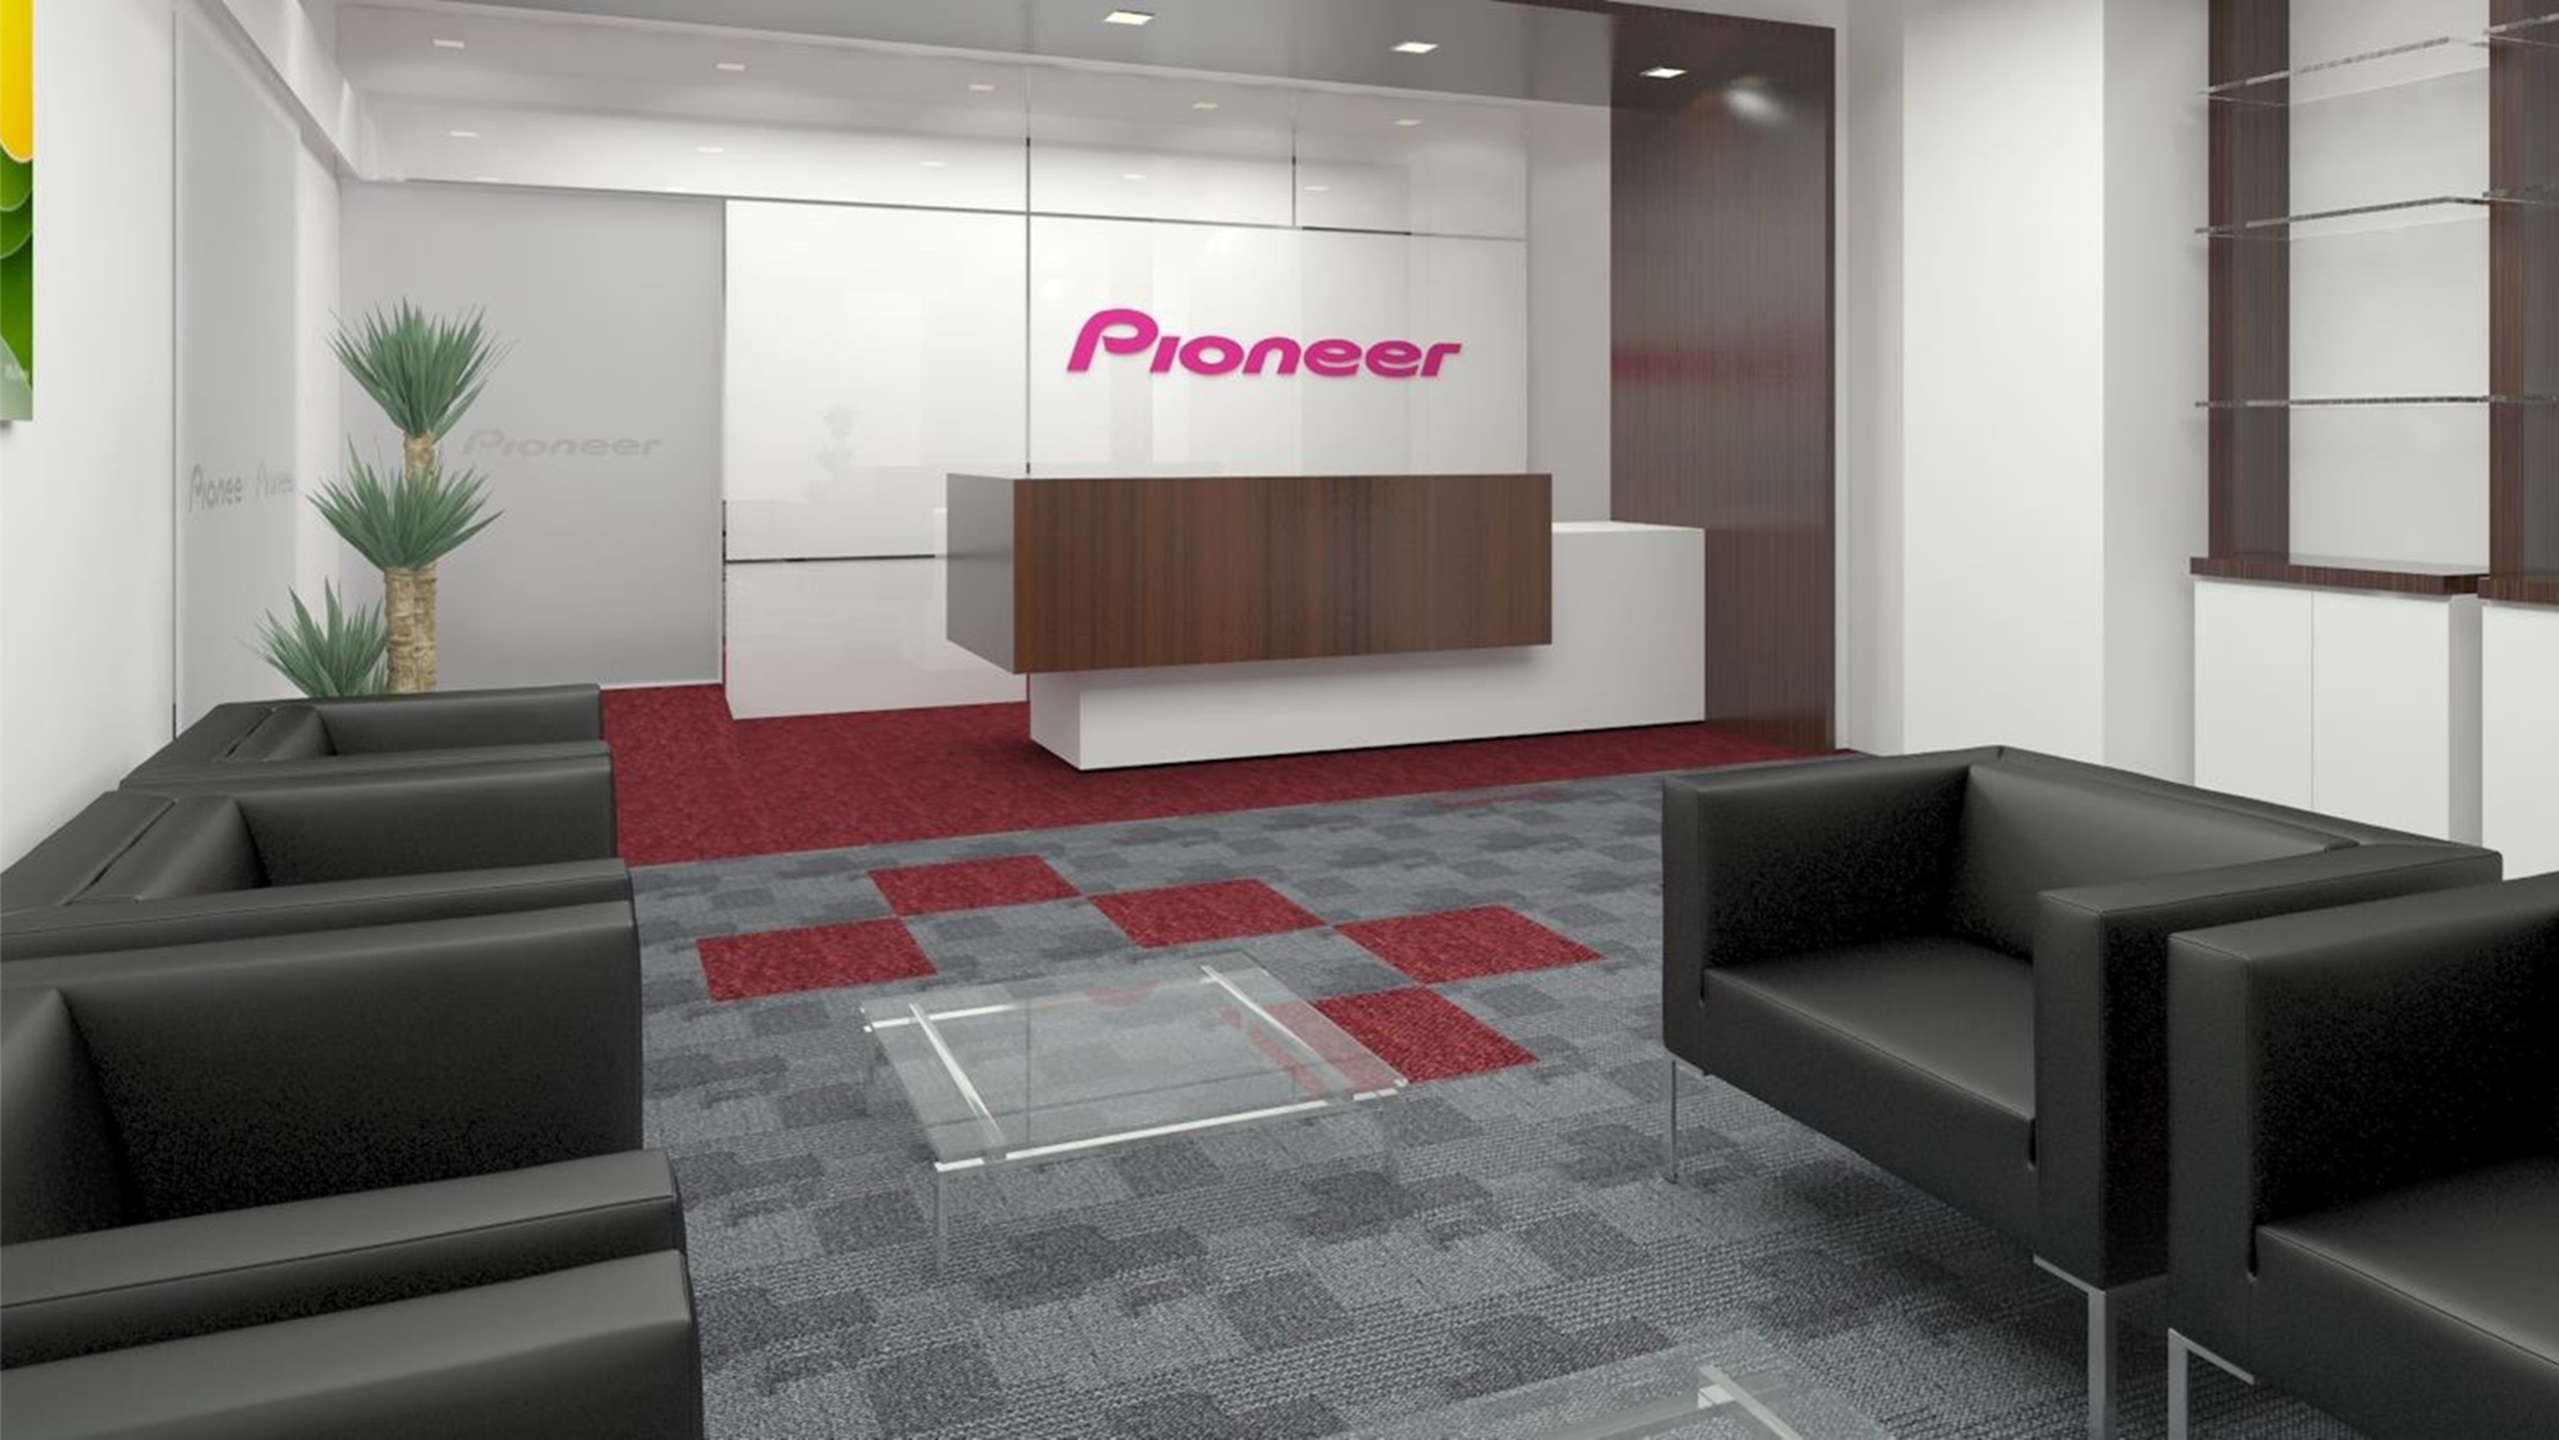 Pioneer Asia